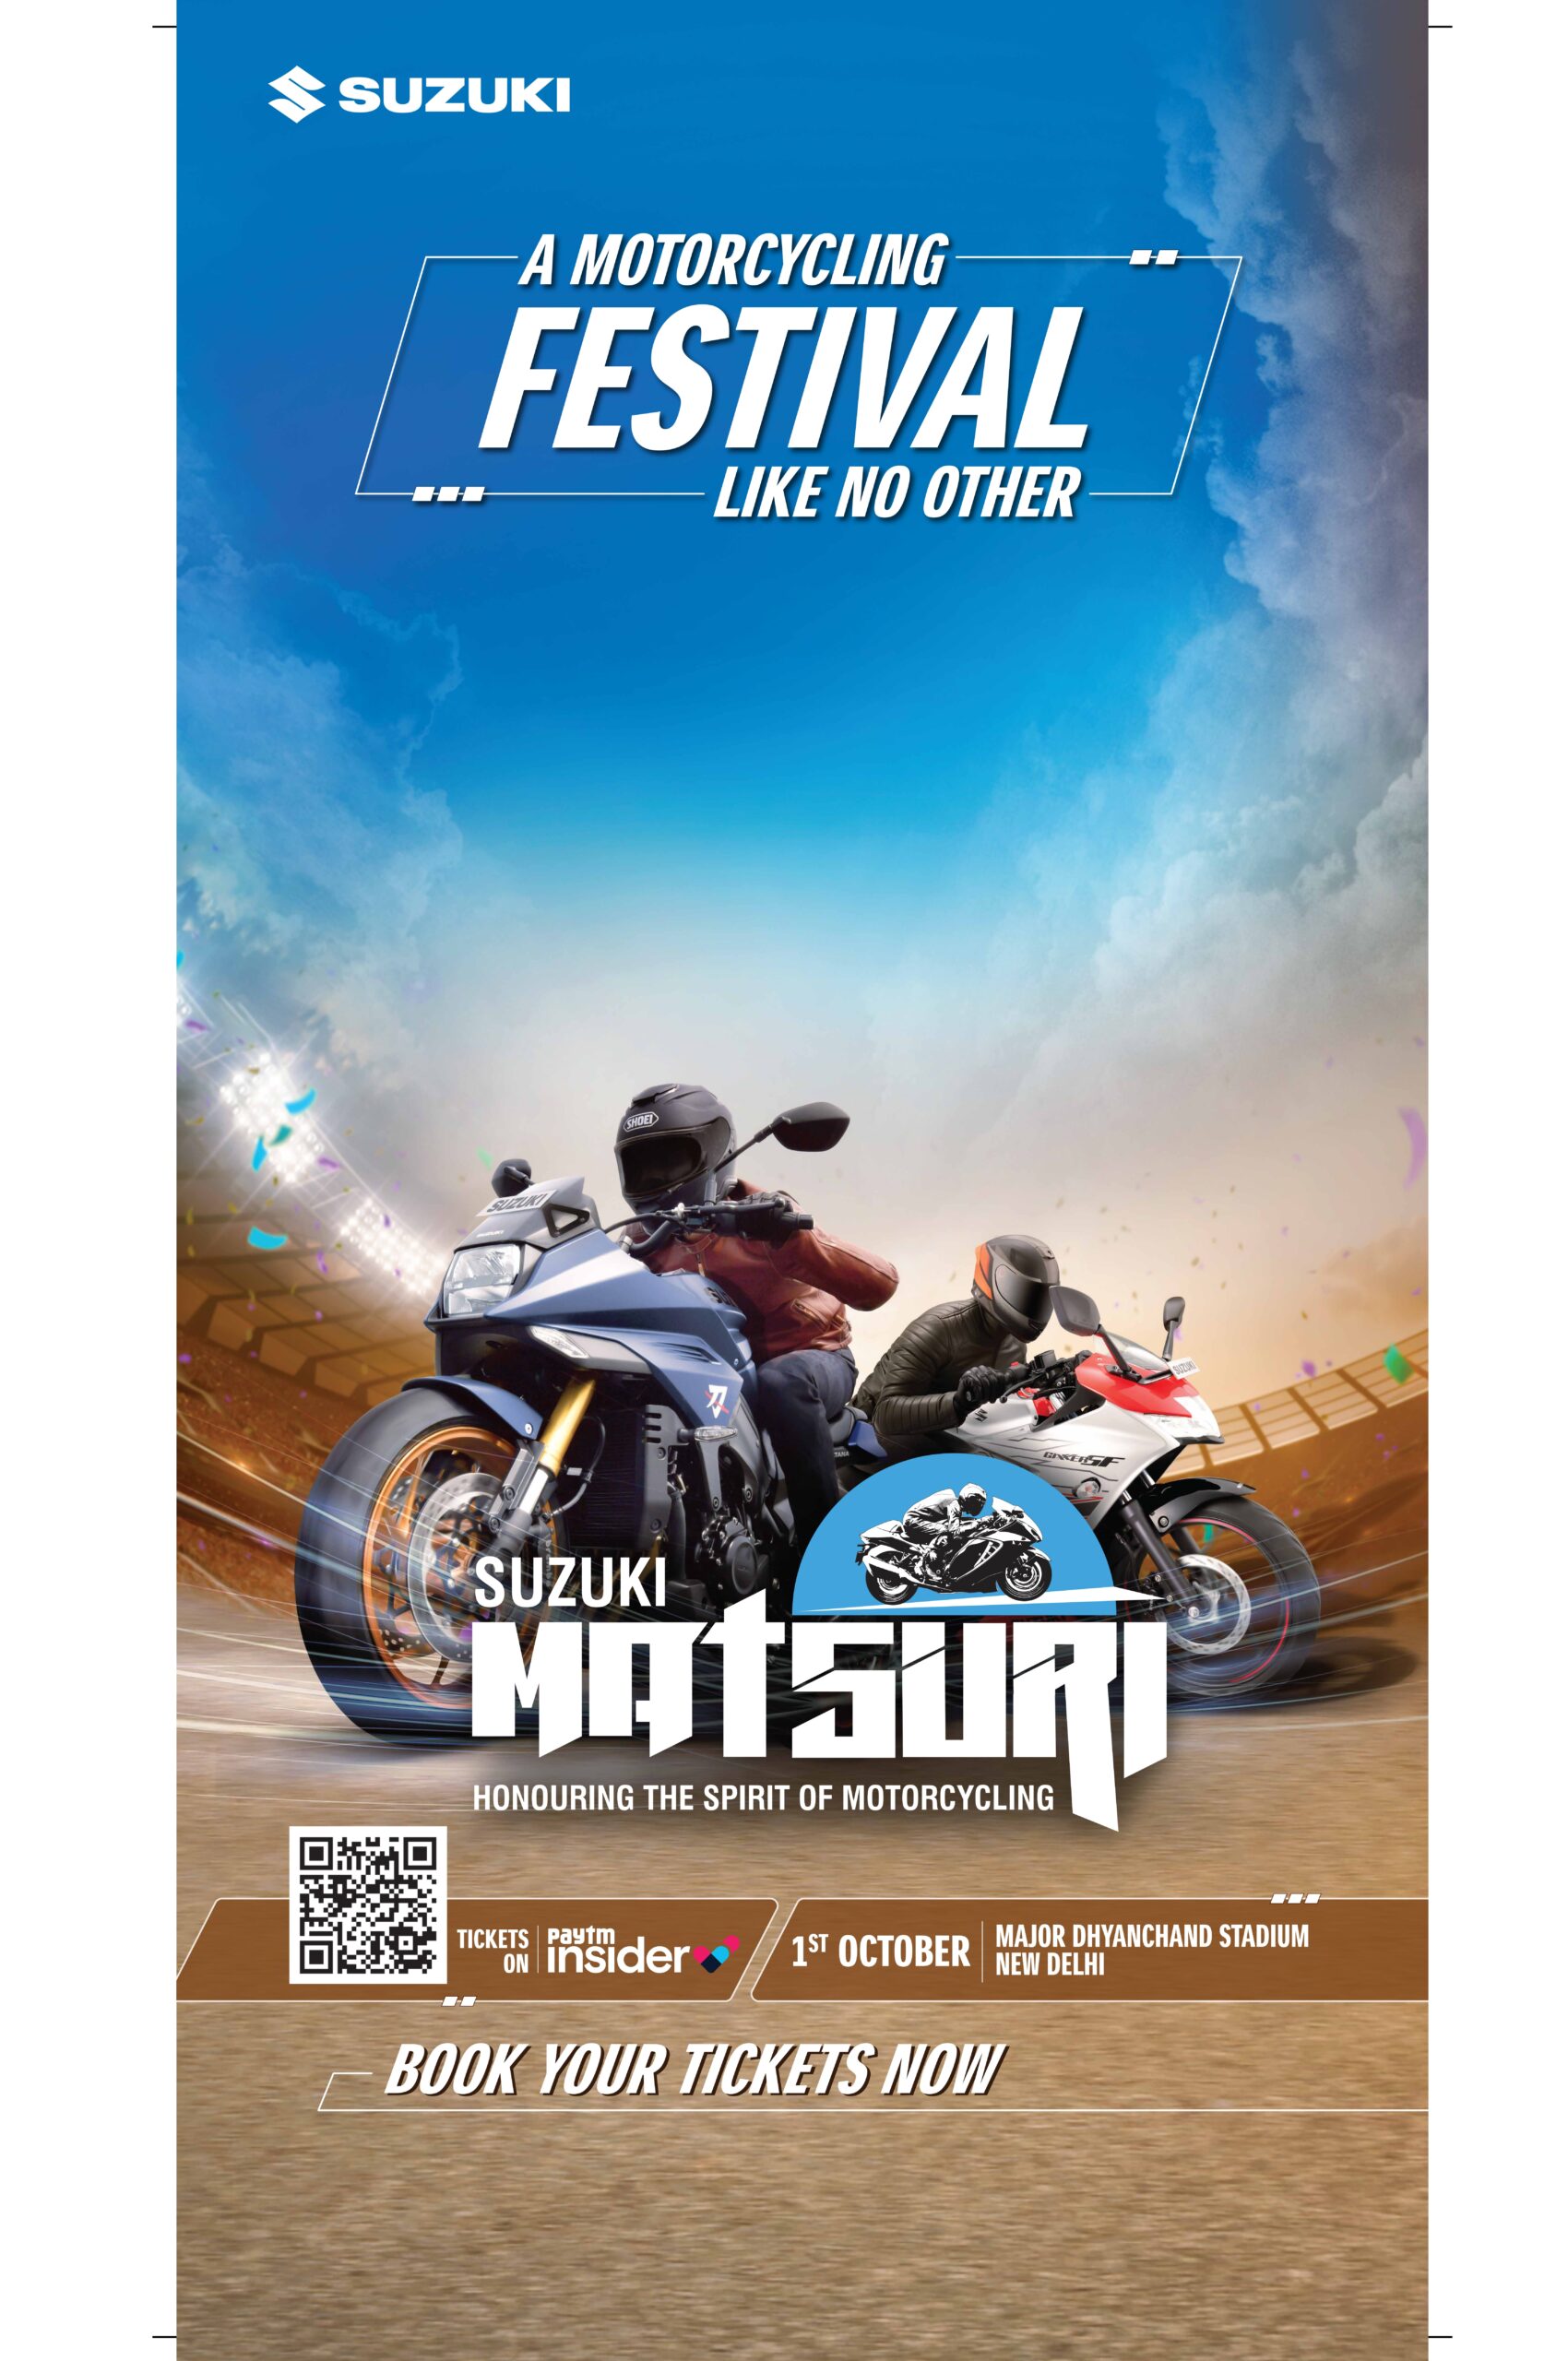 Suzuki Launches Matsuri - A Motorcycle Festival - Location And Details!